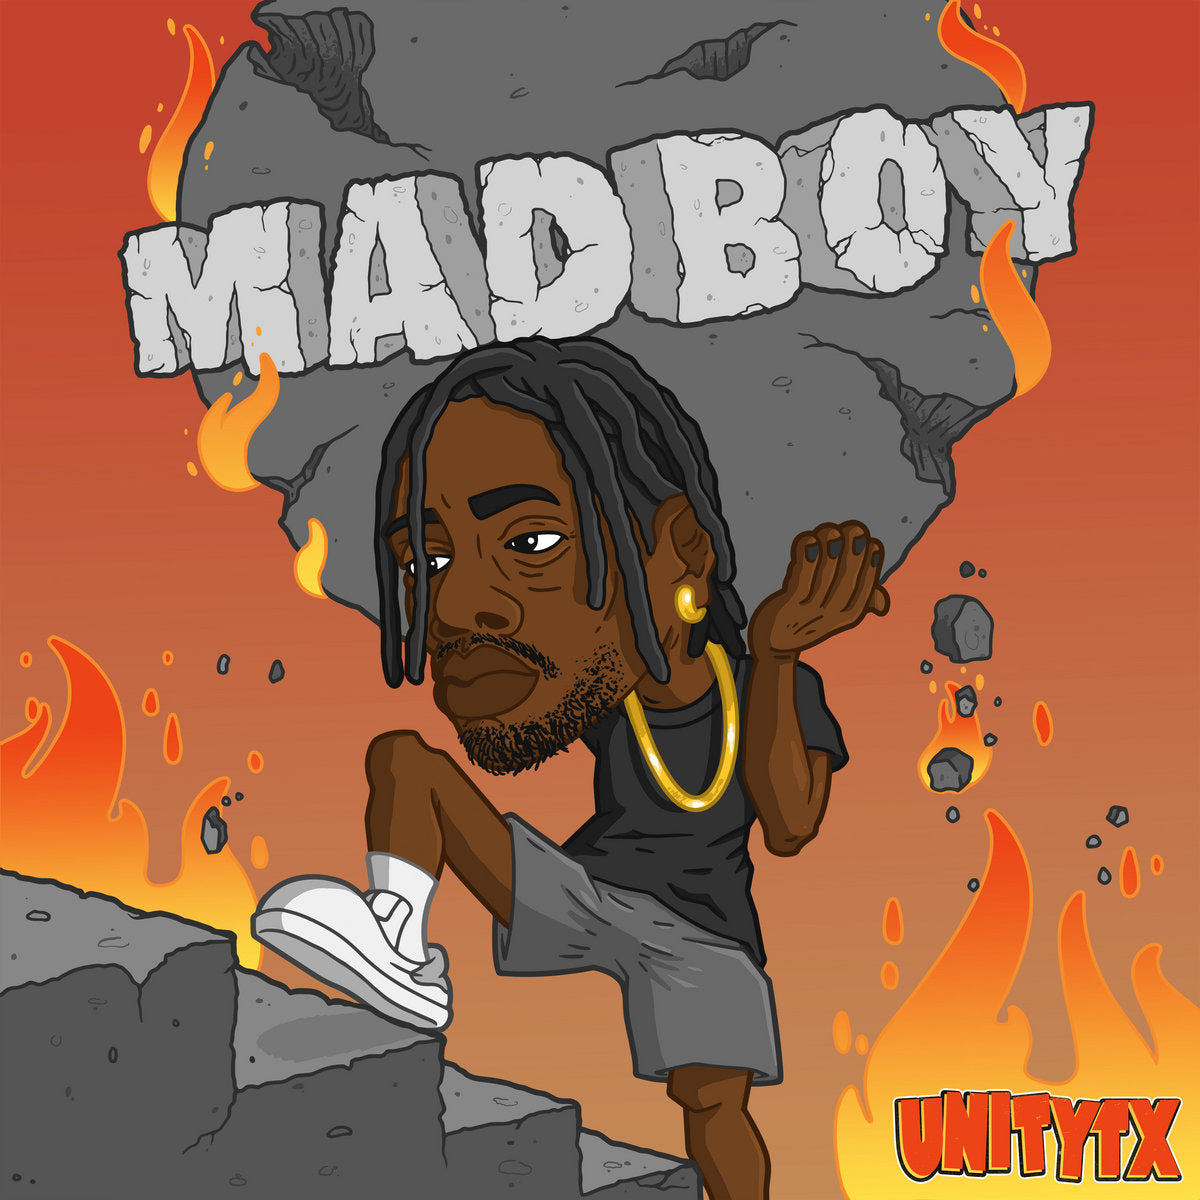 Unitytx - "Madboy"